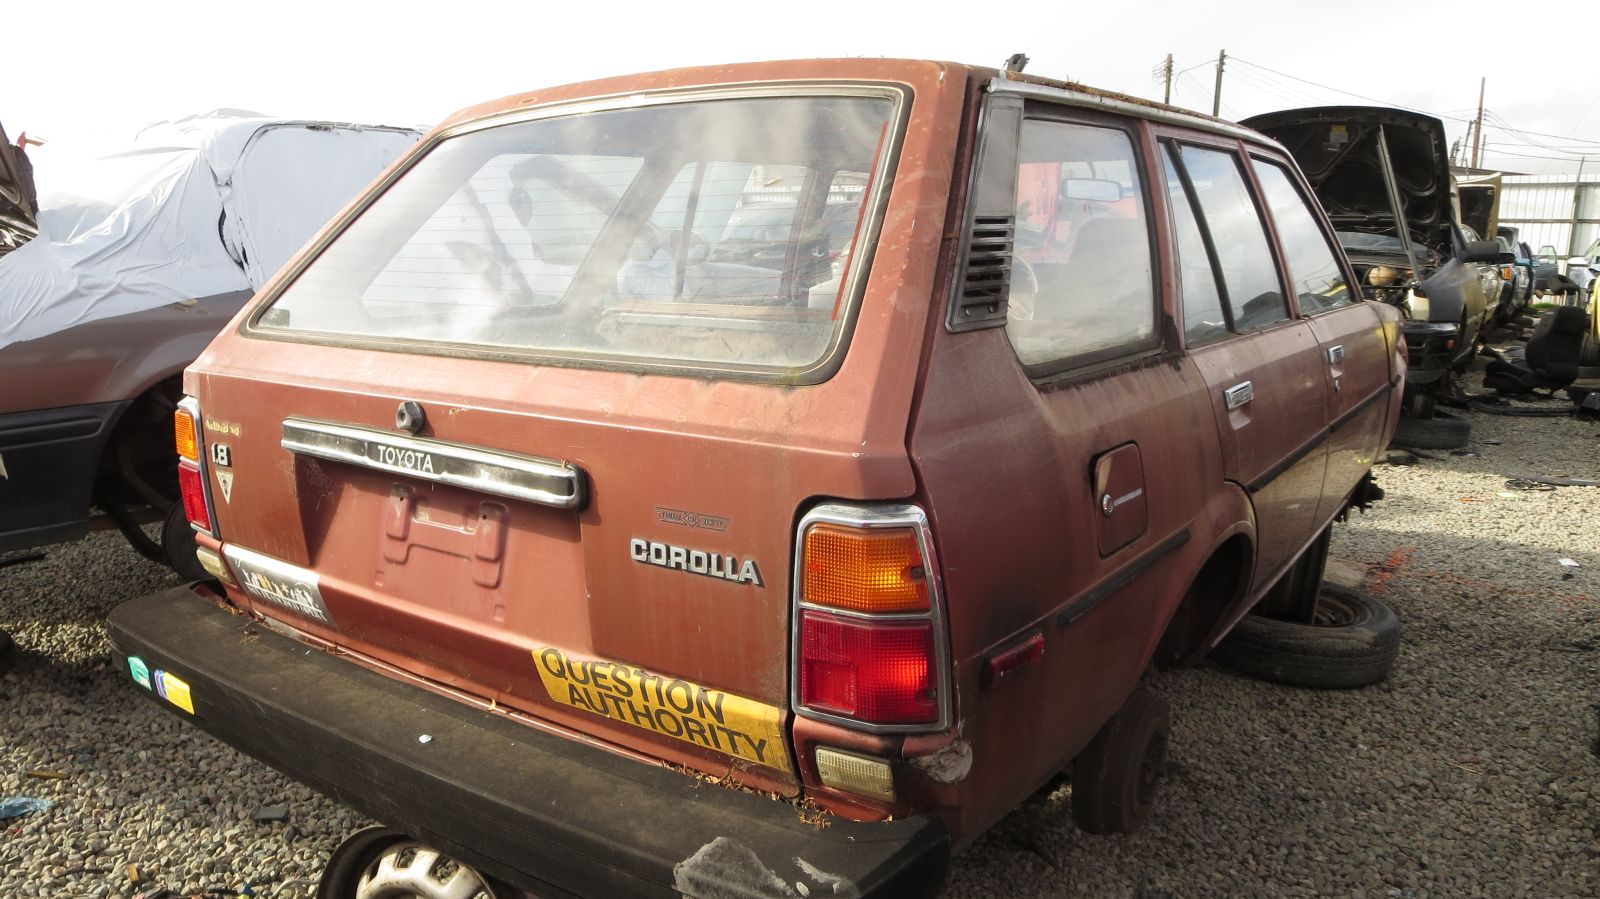 11 - 1980 Toyota Corolla wagon in California junkyard - photo by Murilee Martin